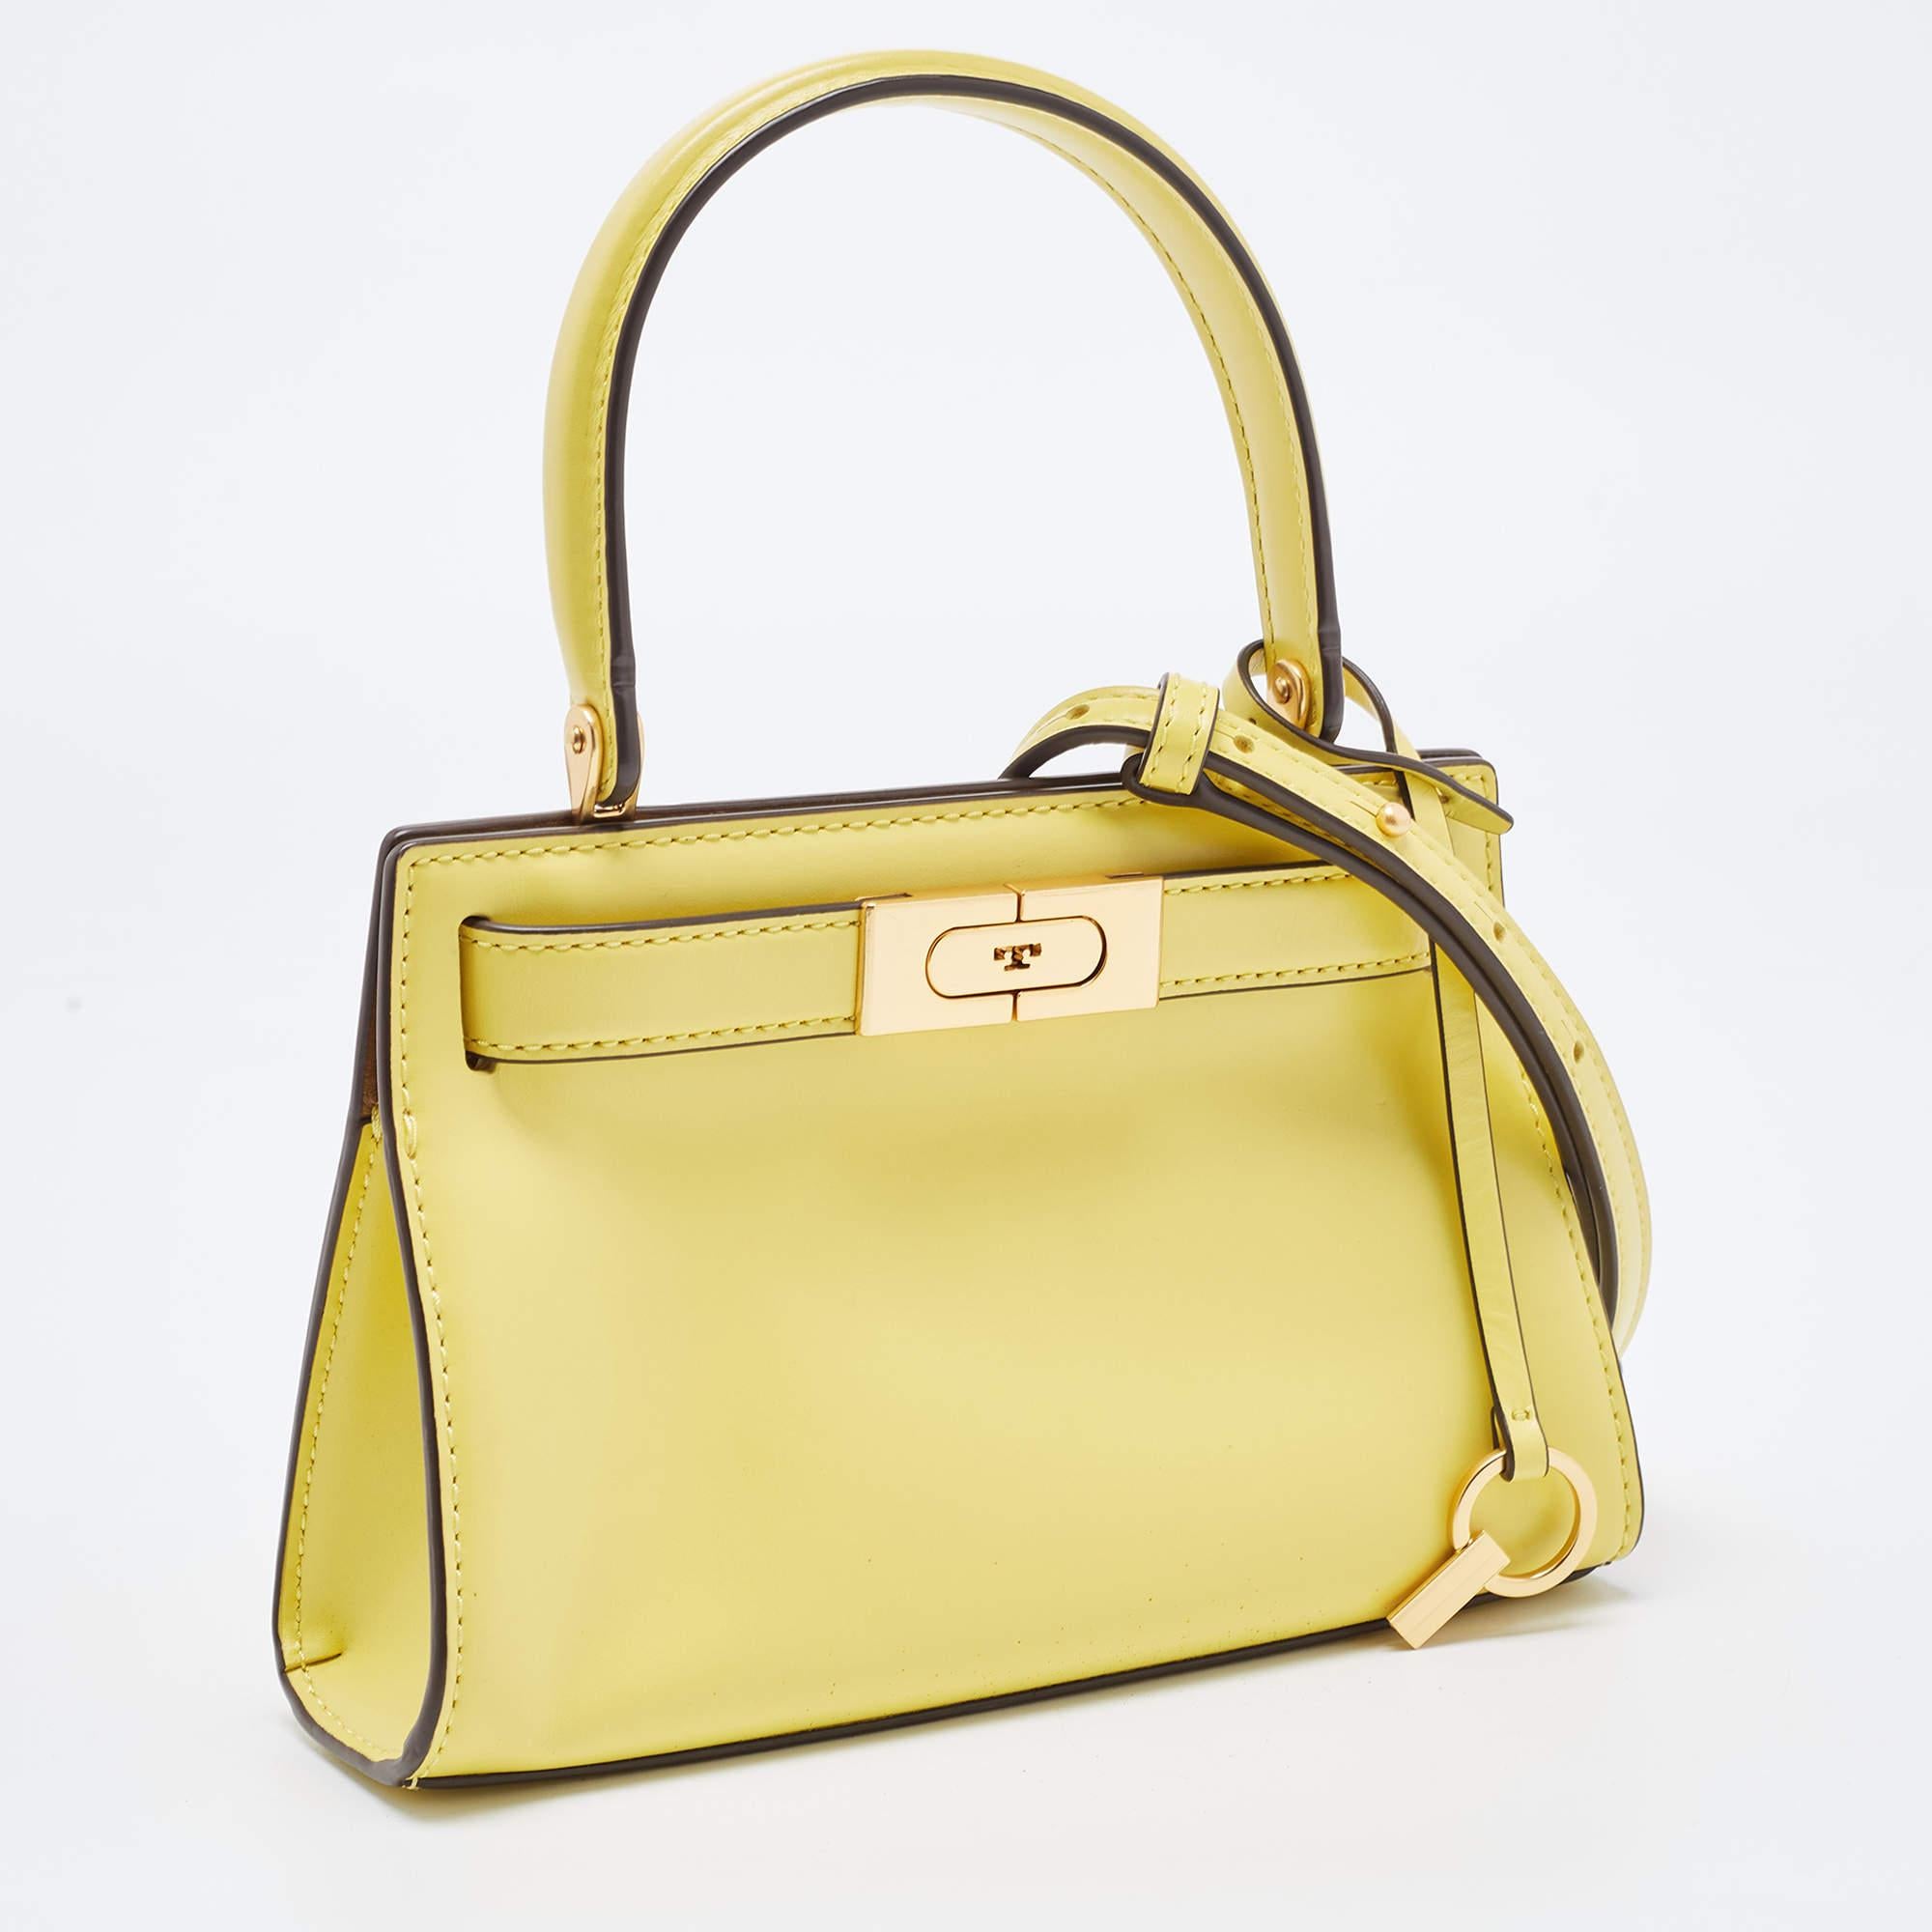 Women's Tory Burch Yellow Leather Petite Lee Radziwill Top Handle Bag